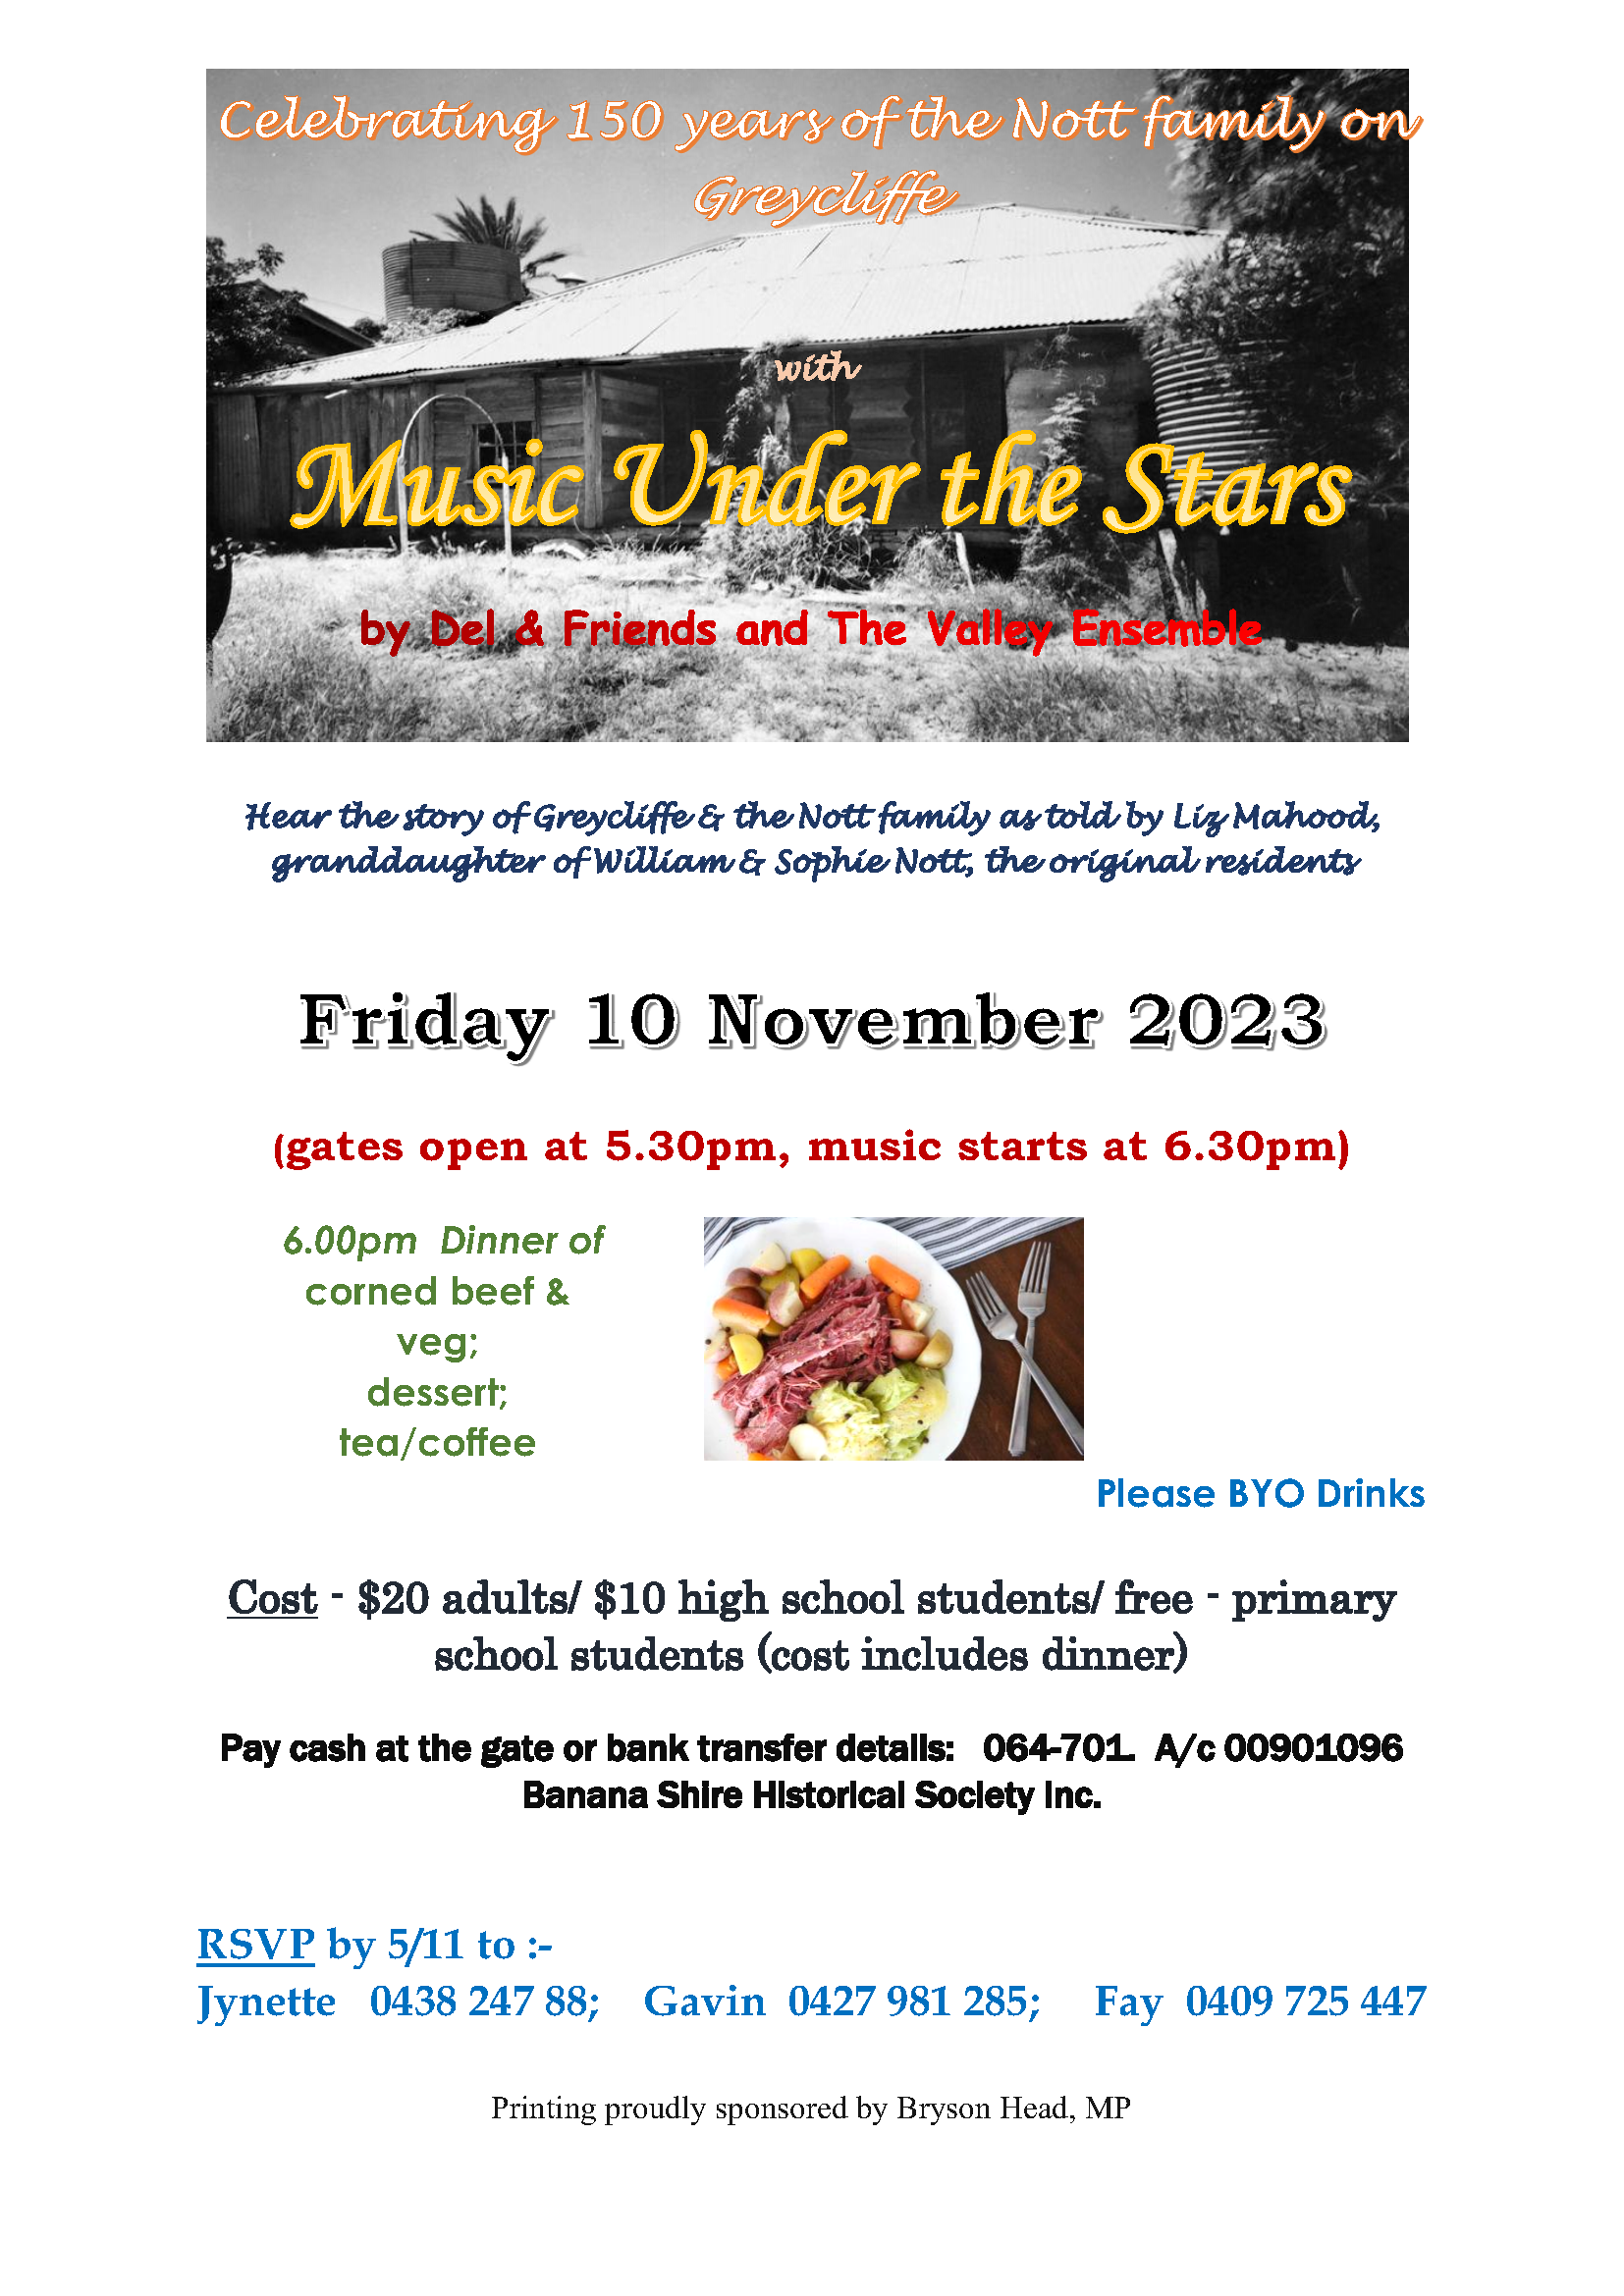 Music Under the Stars, Celebrating 150 years Greycliffe